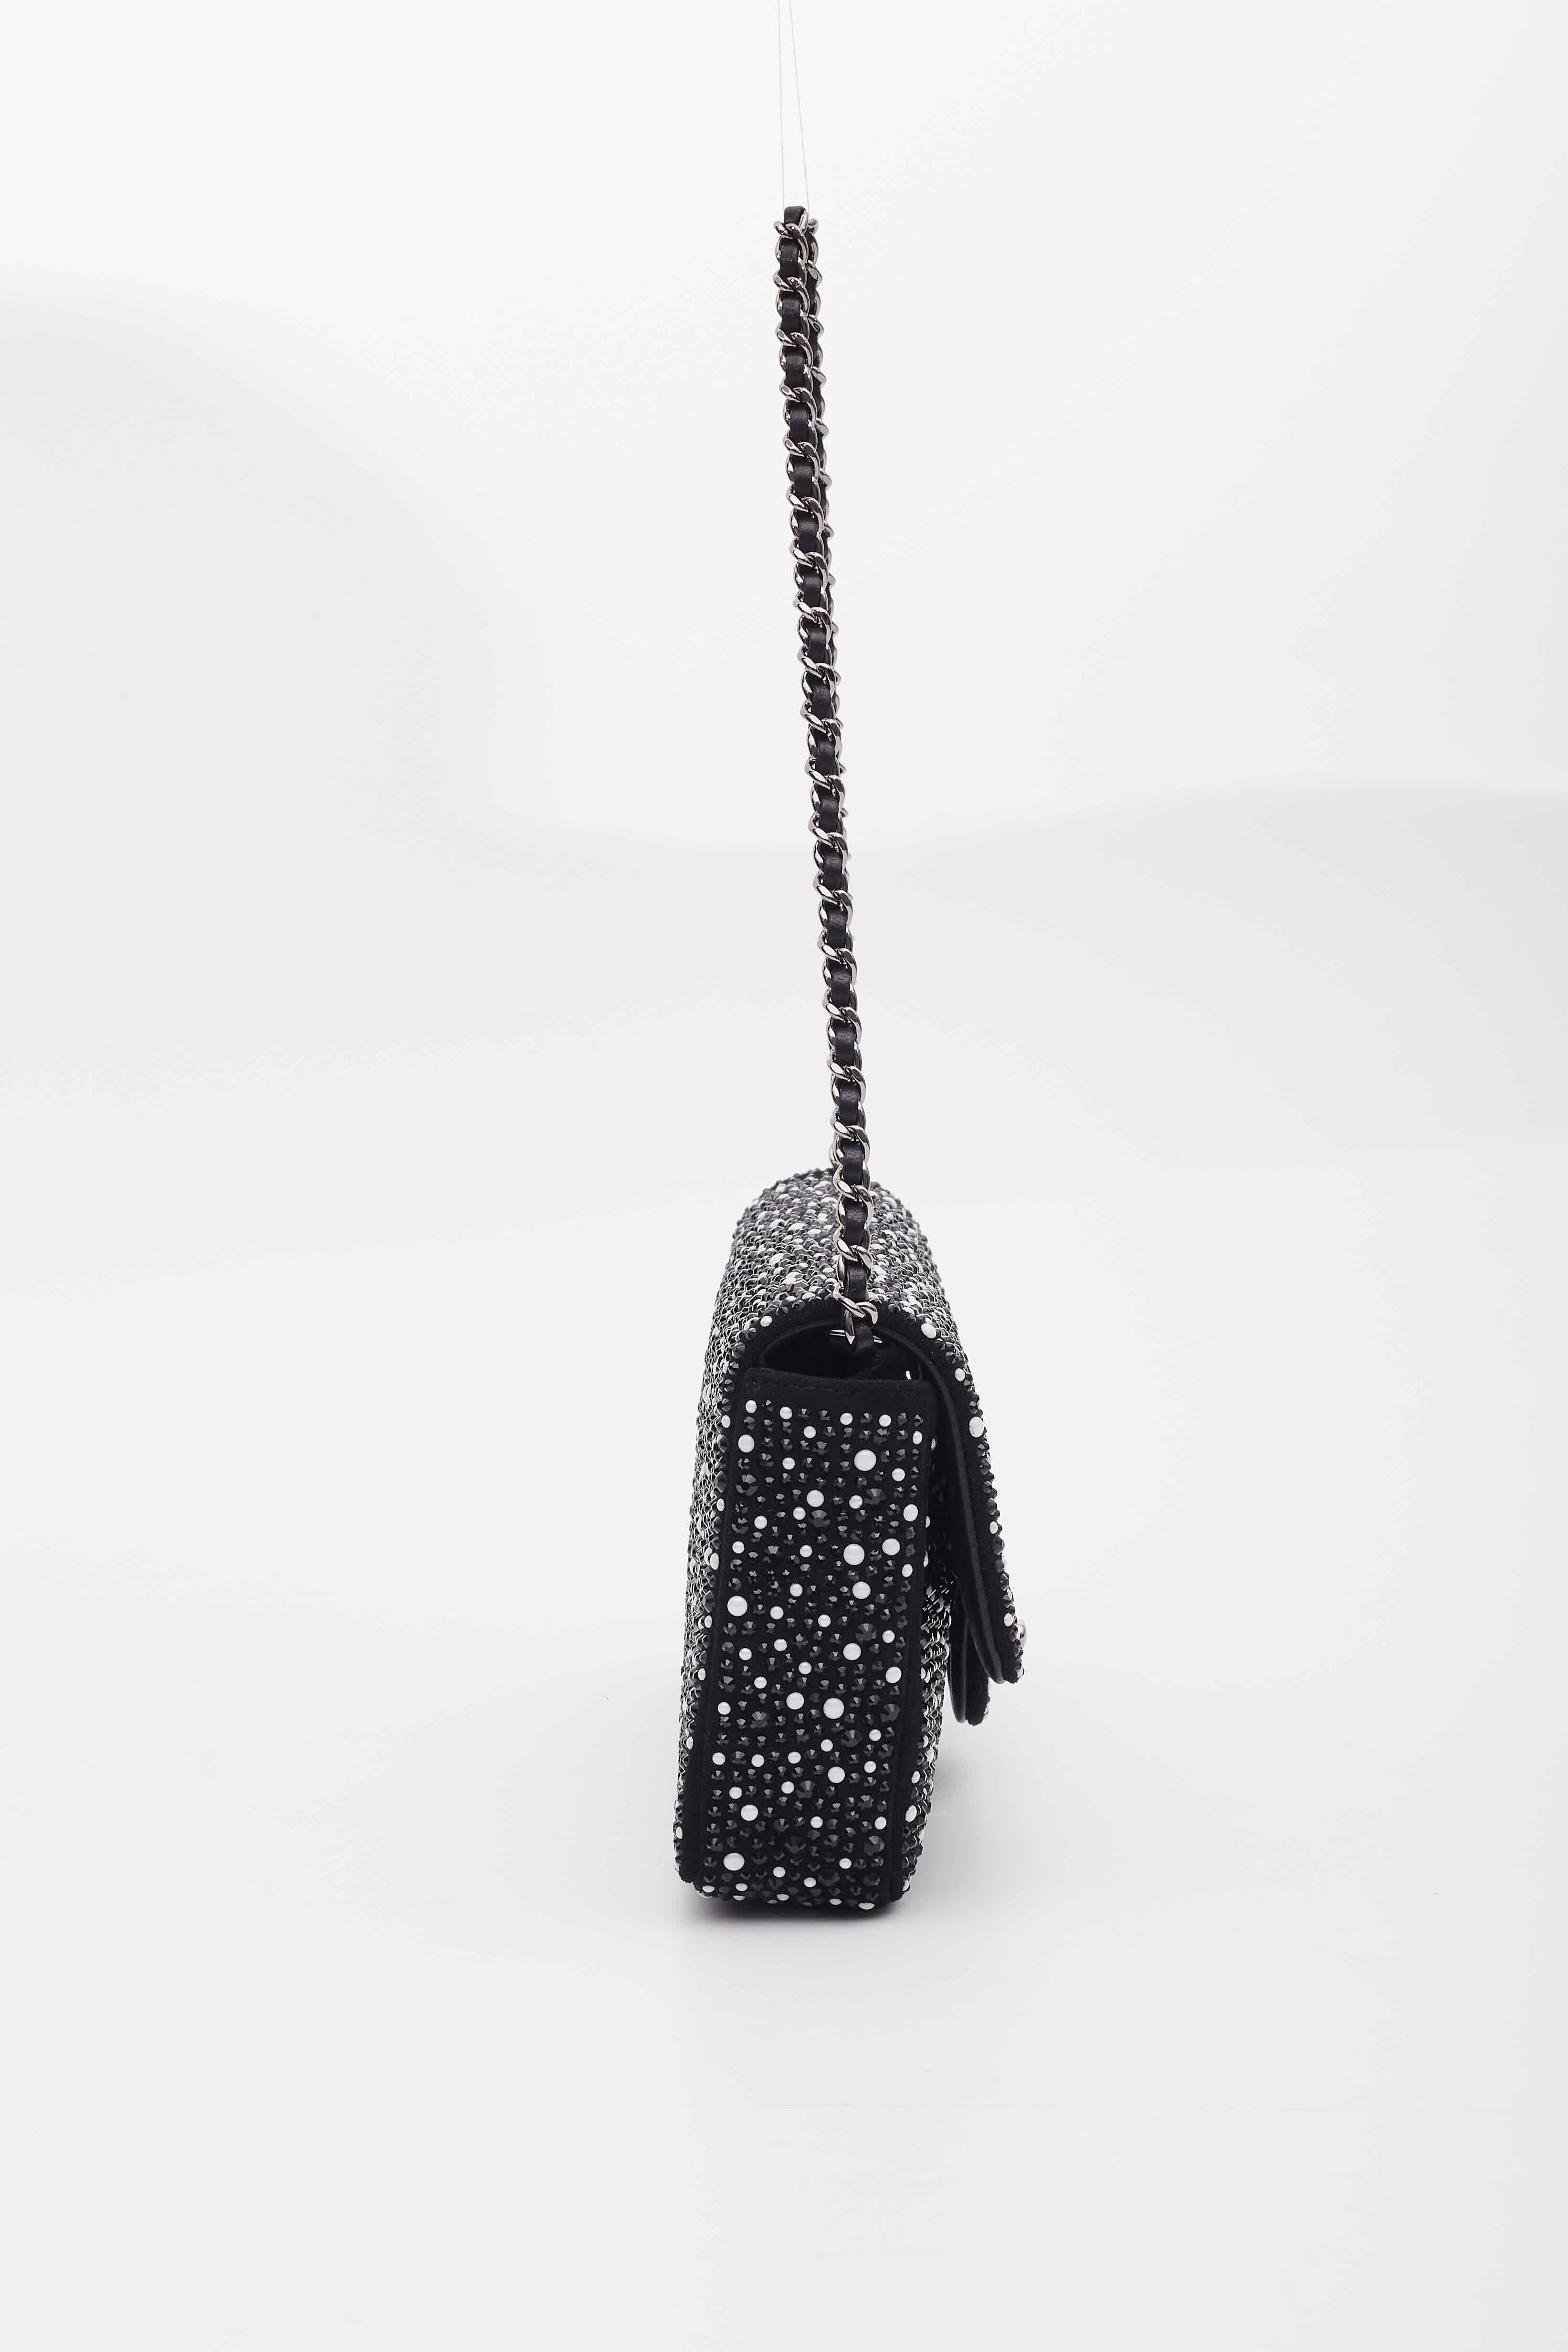 Women's Chanel Strass Crystal Pearls & Ruthenium Metal Shoulder Bag Black & White